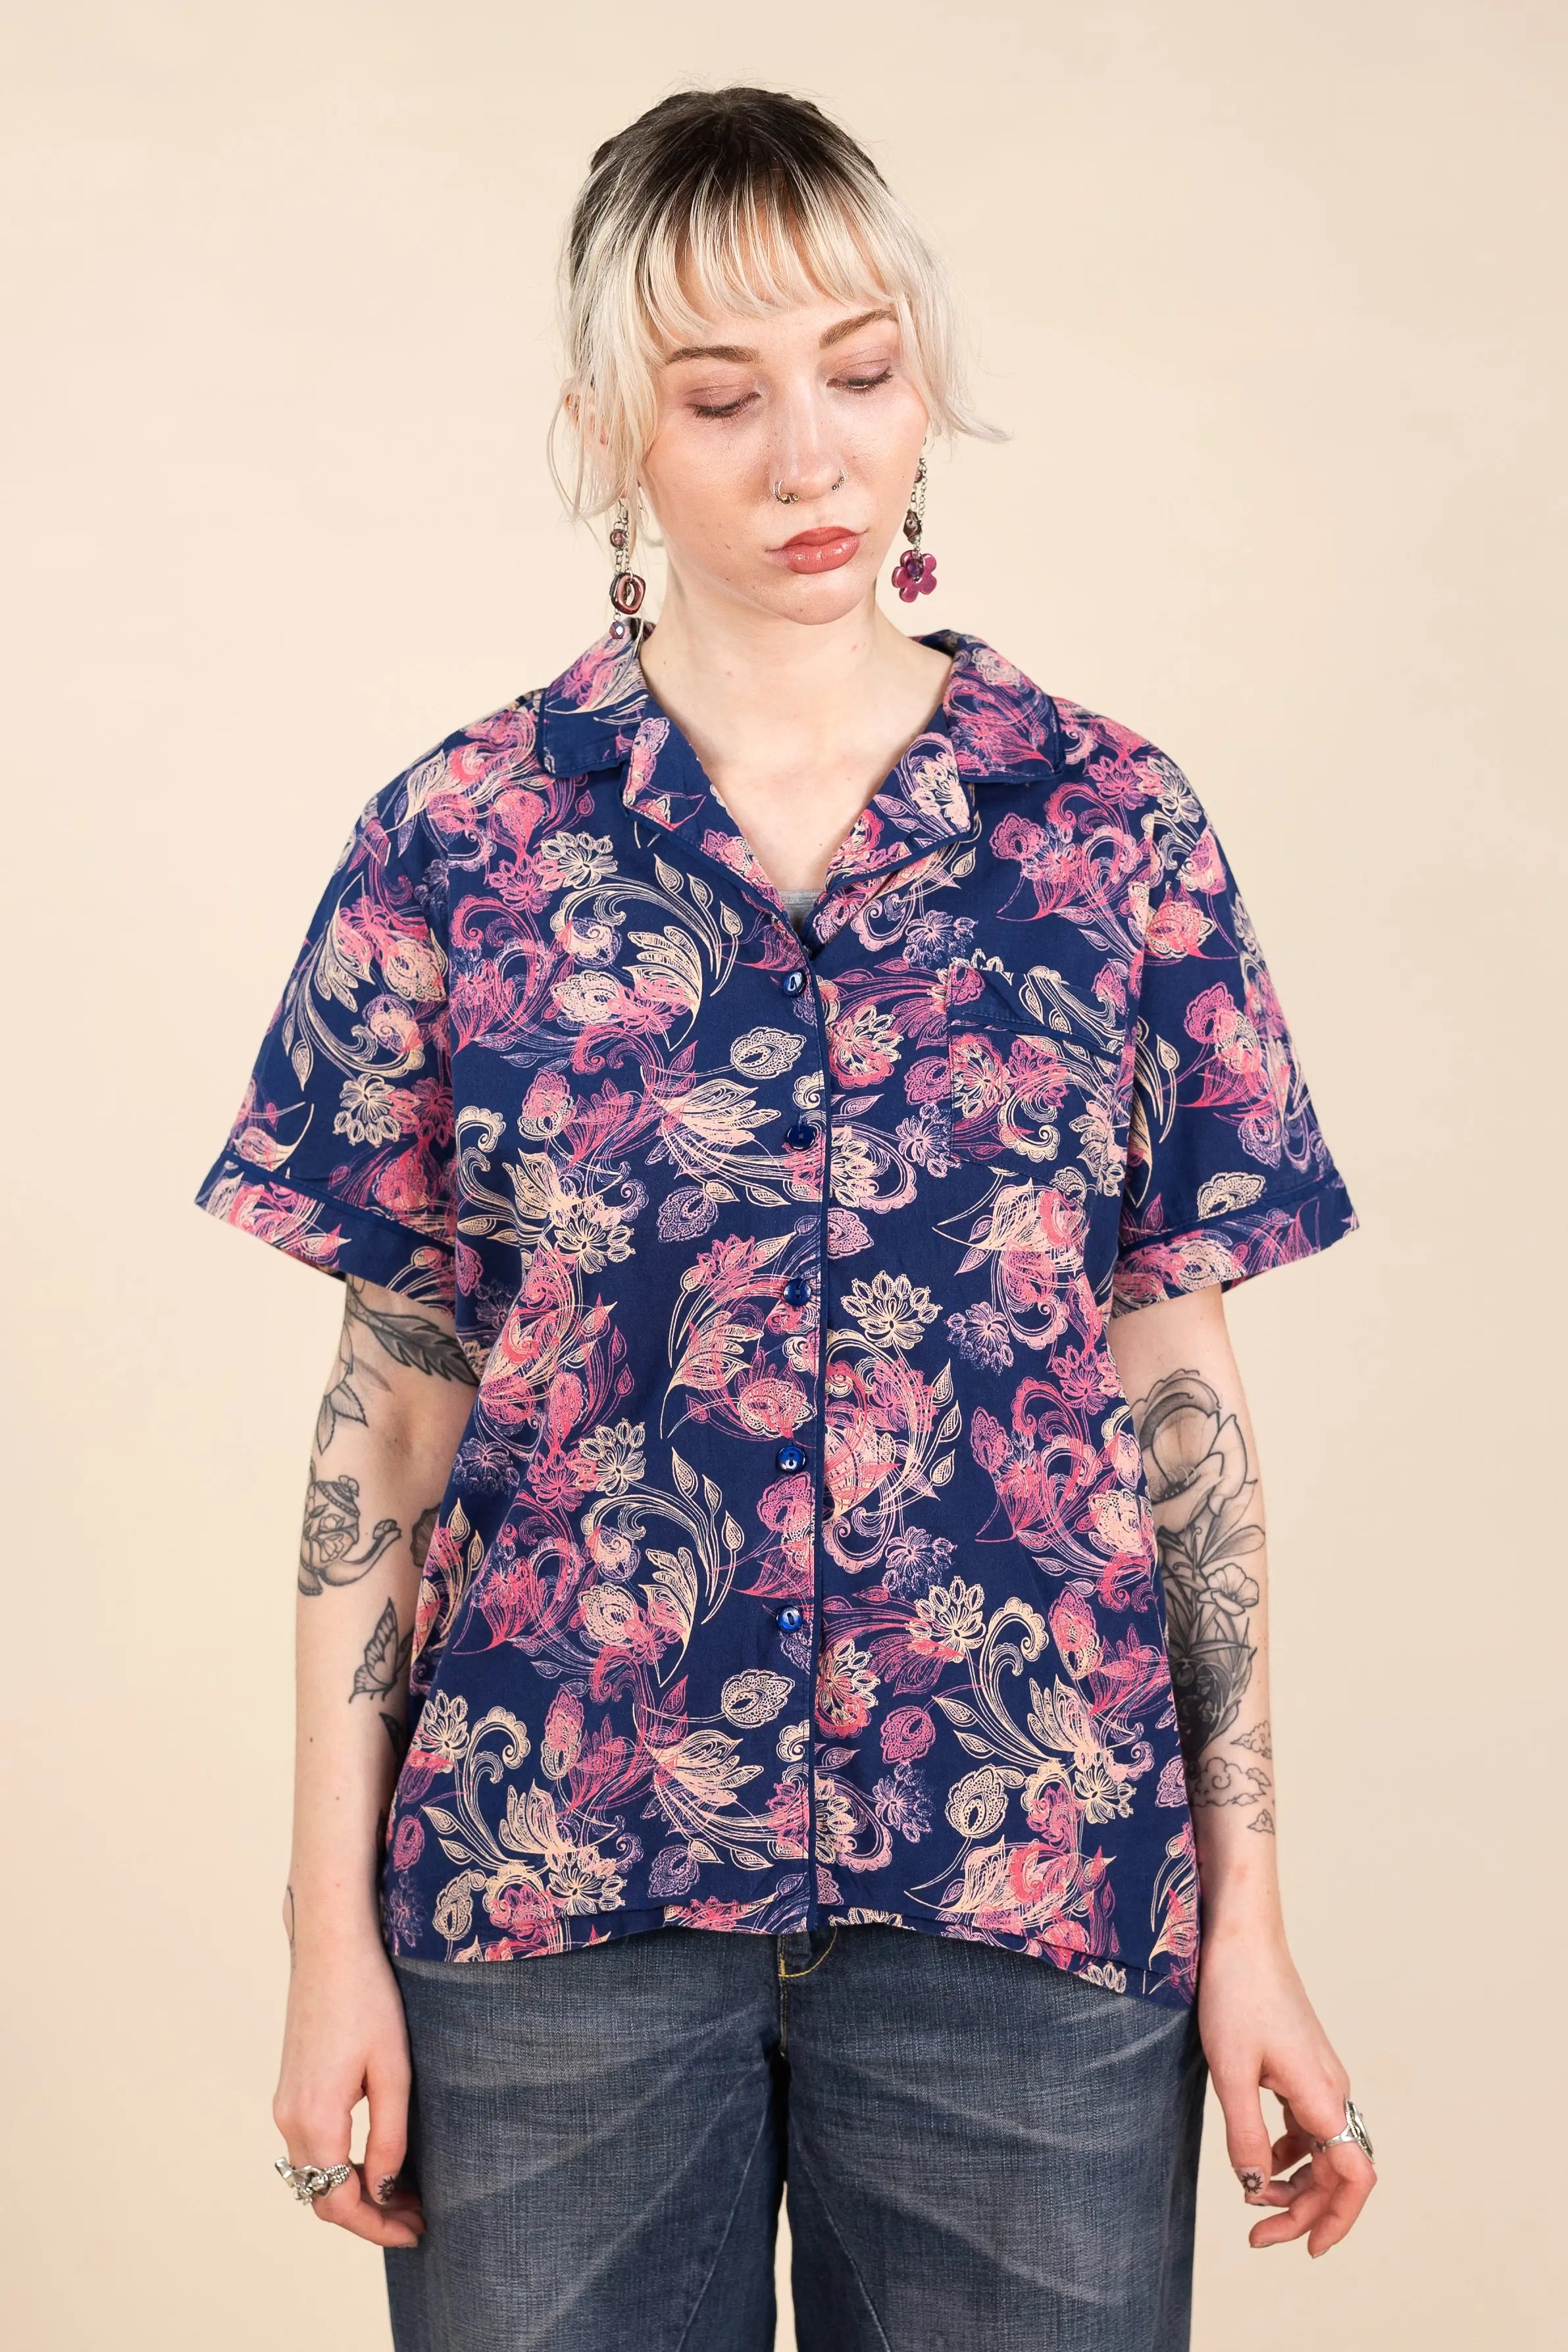 Liz Claiborne - Patterned Shirt- ThriftTale.com - Vintage and second handclothing